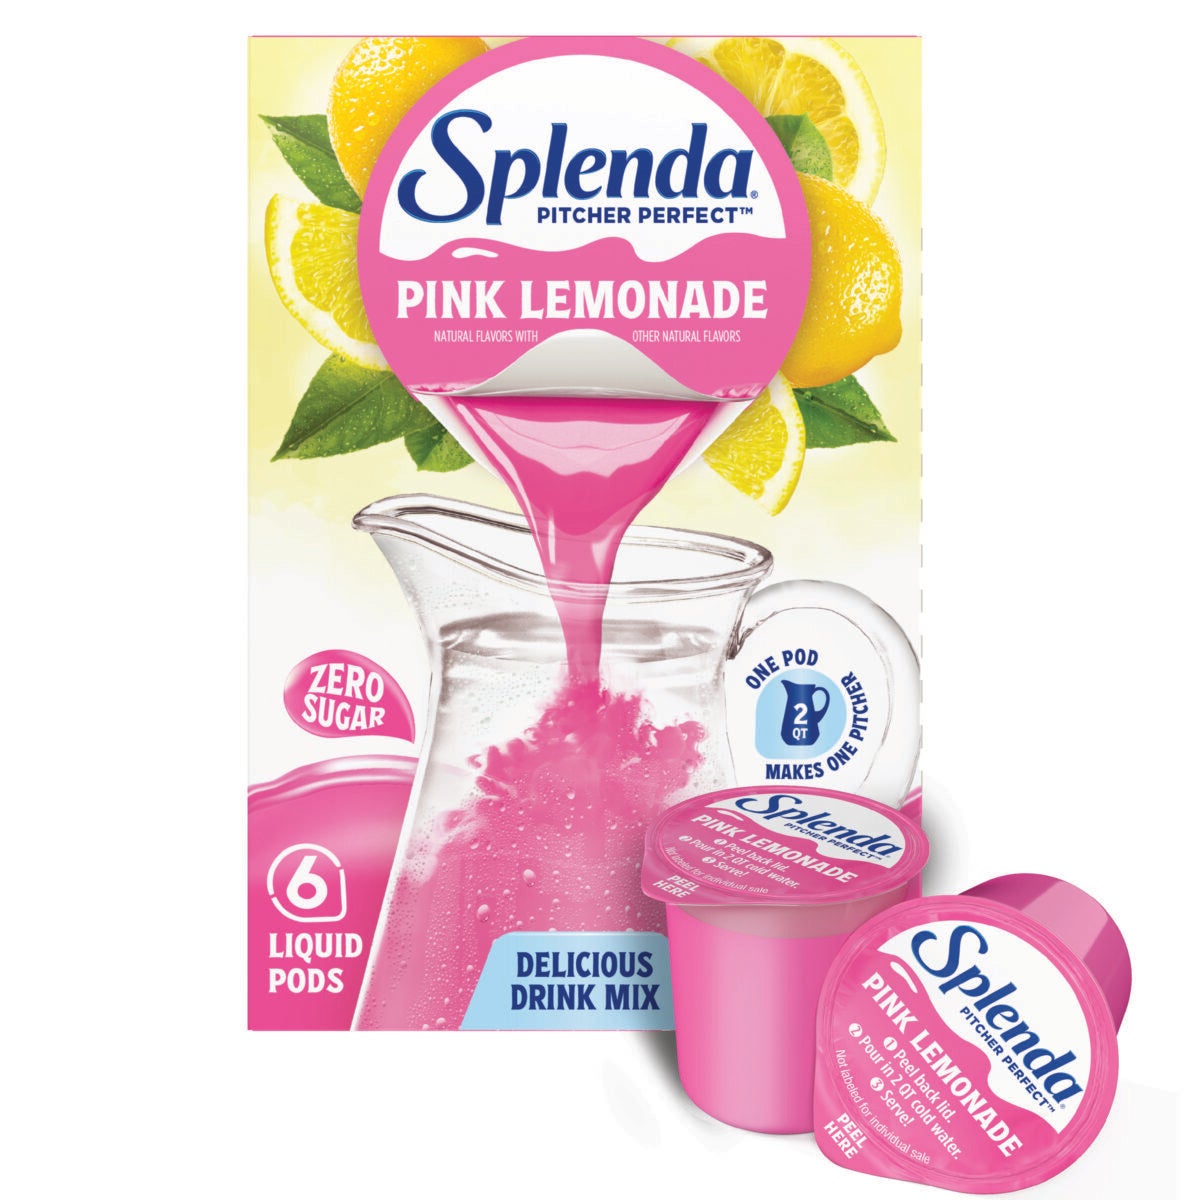 Splenda Pitcher Perfect Pink Lemonade Zero Sugar Drink Mix – Front